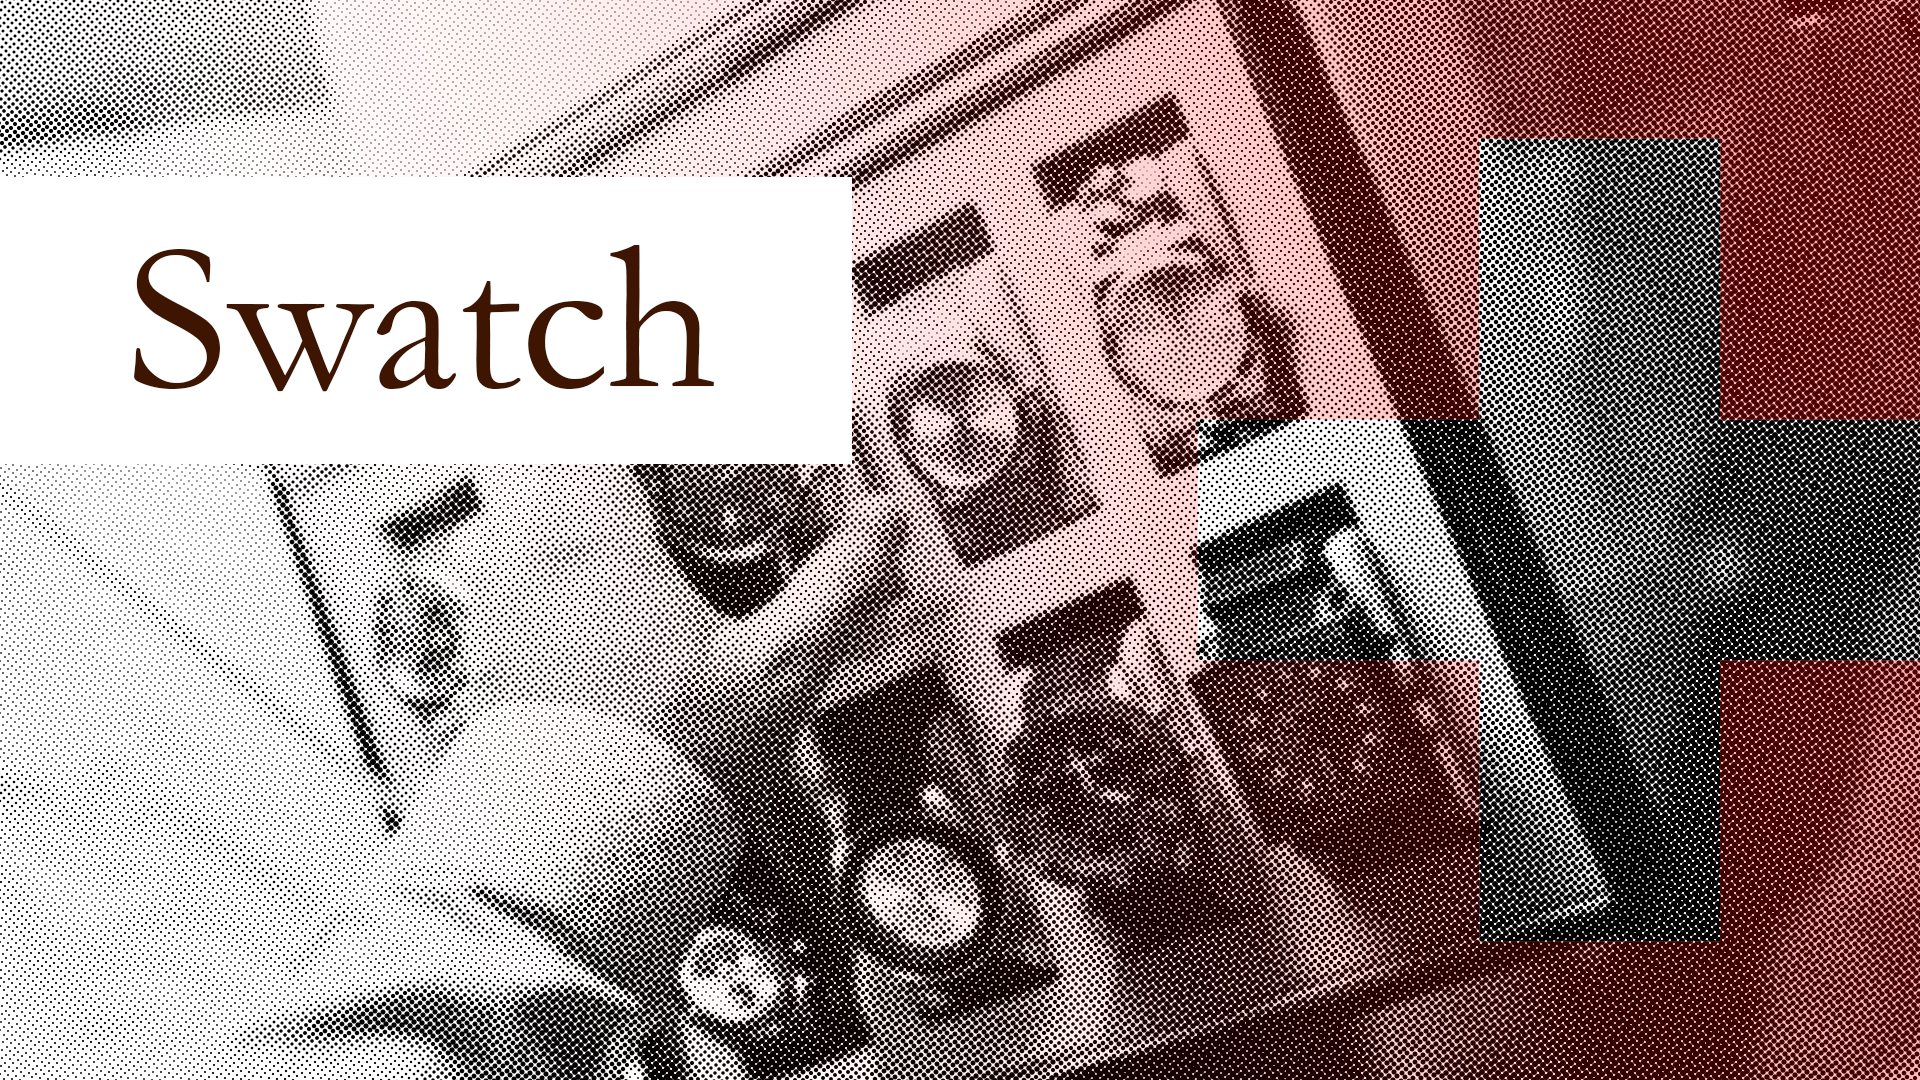 Swatch - a safe bet among luxury stocks